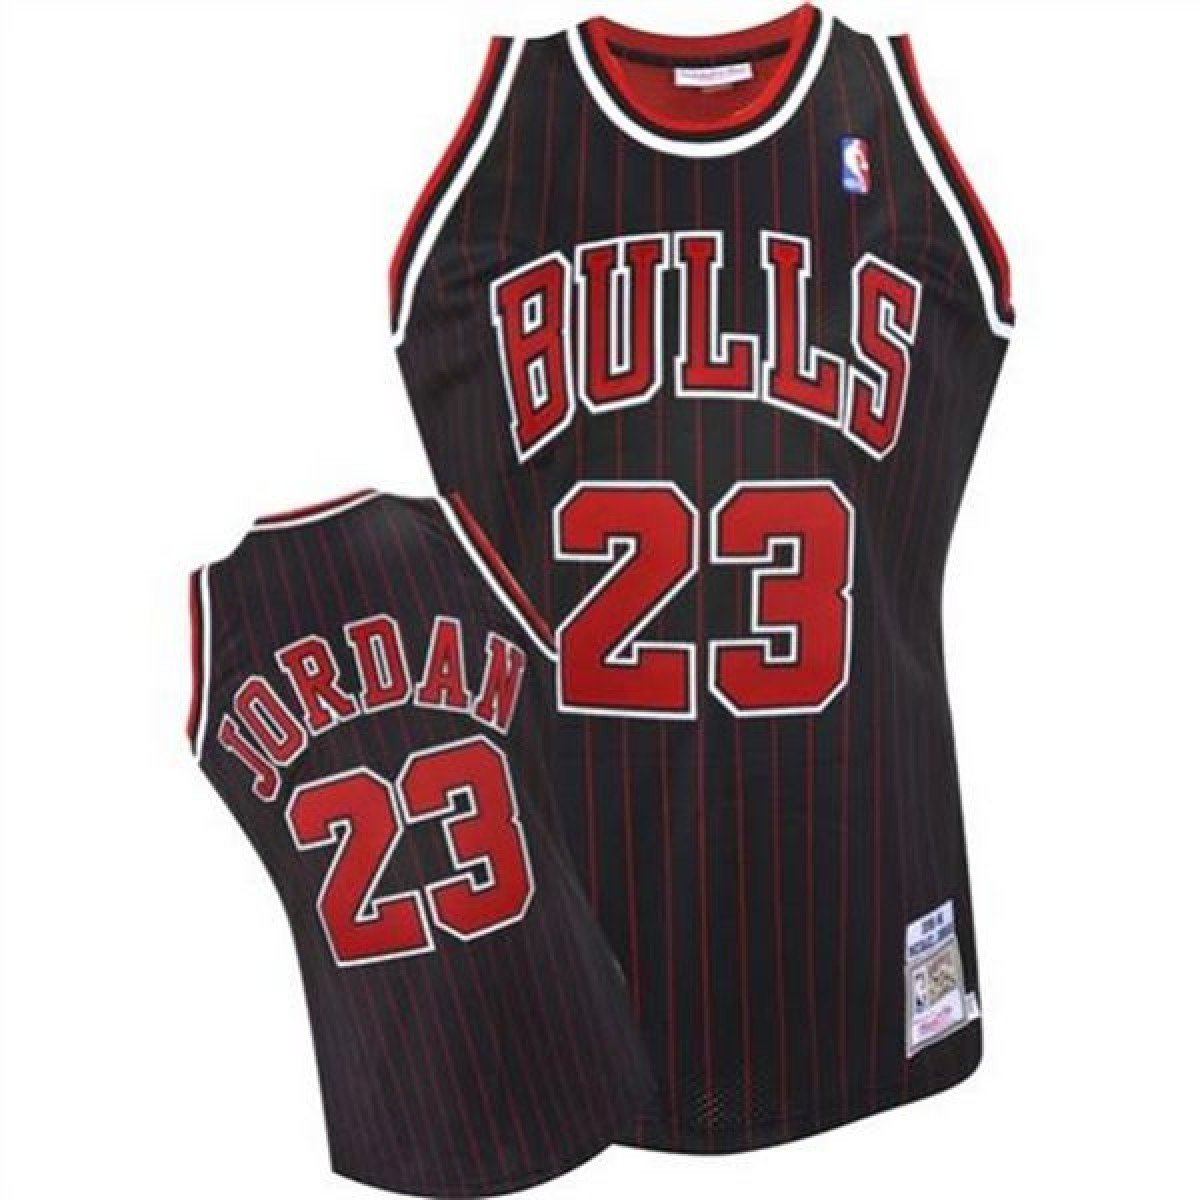 Nba Chicago Bulls Basketball Jersey #23 Jordan As-is Distressed